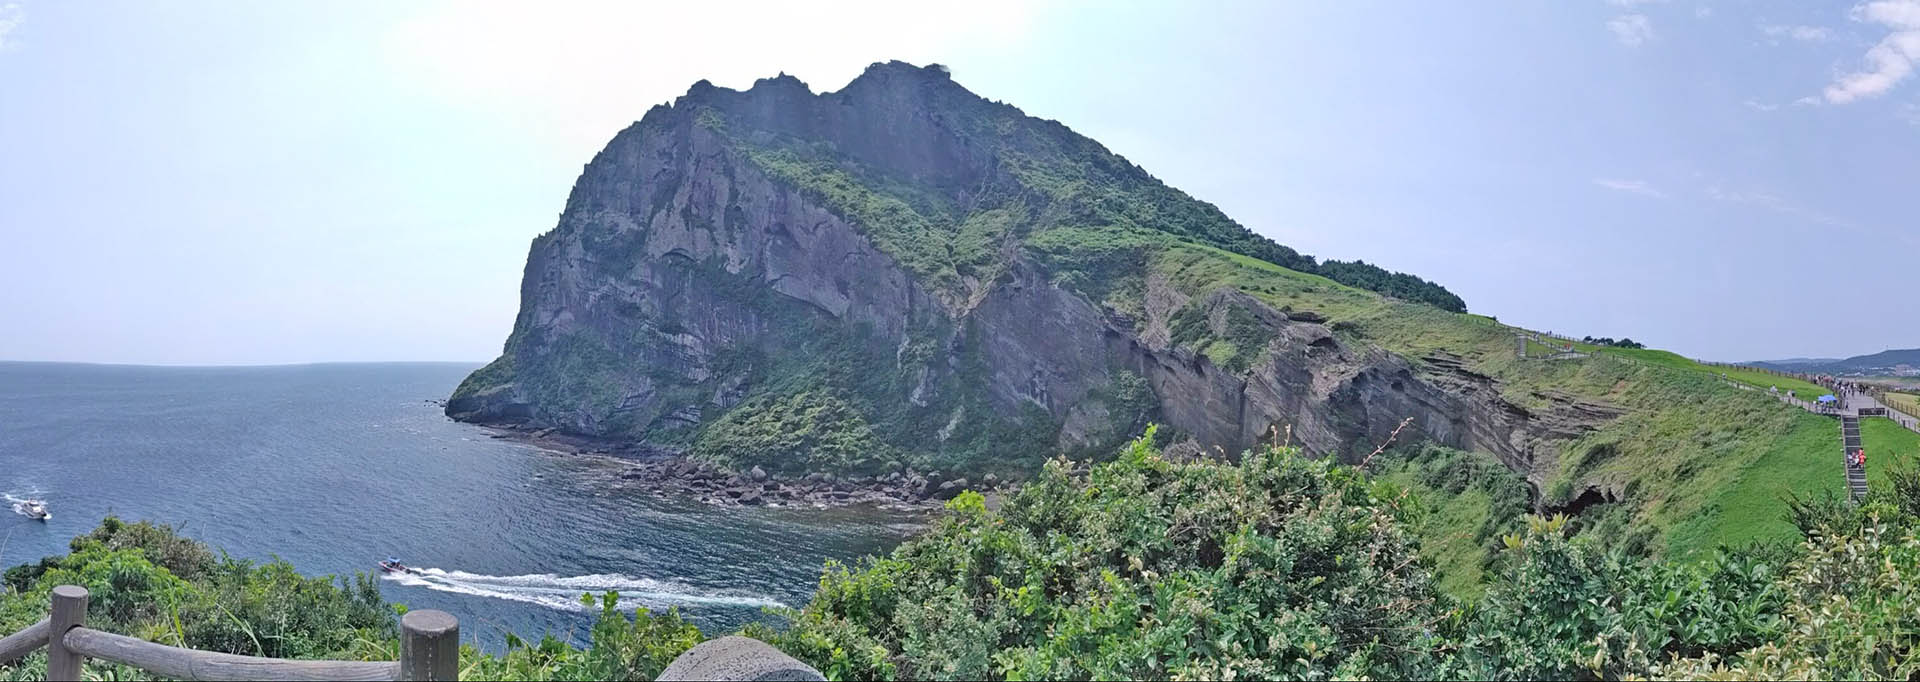 Jejudo Island- A Three Day Travel Guide